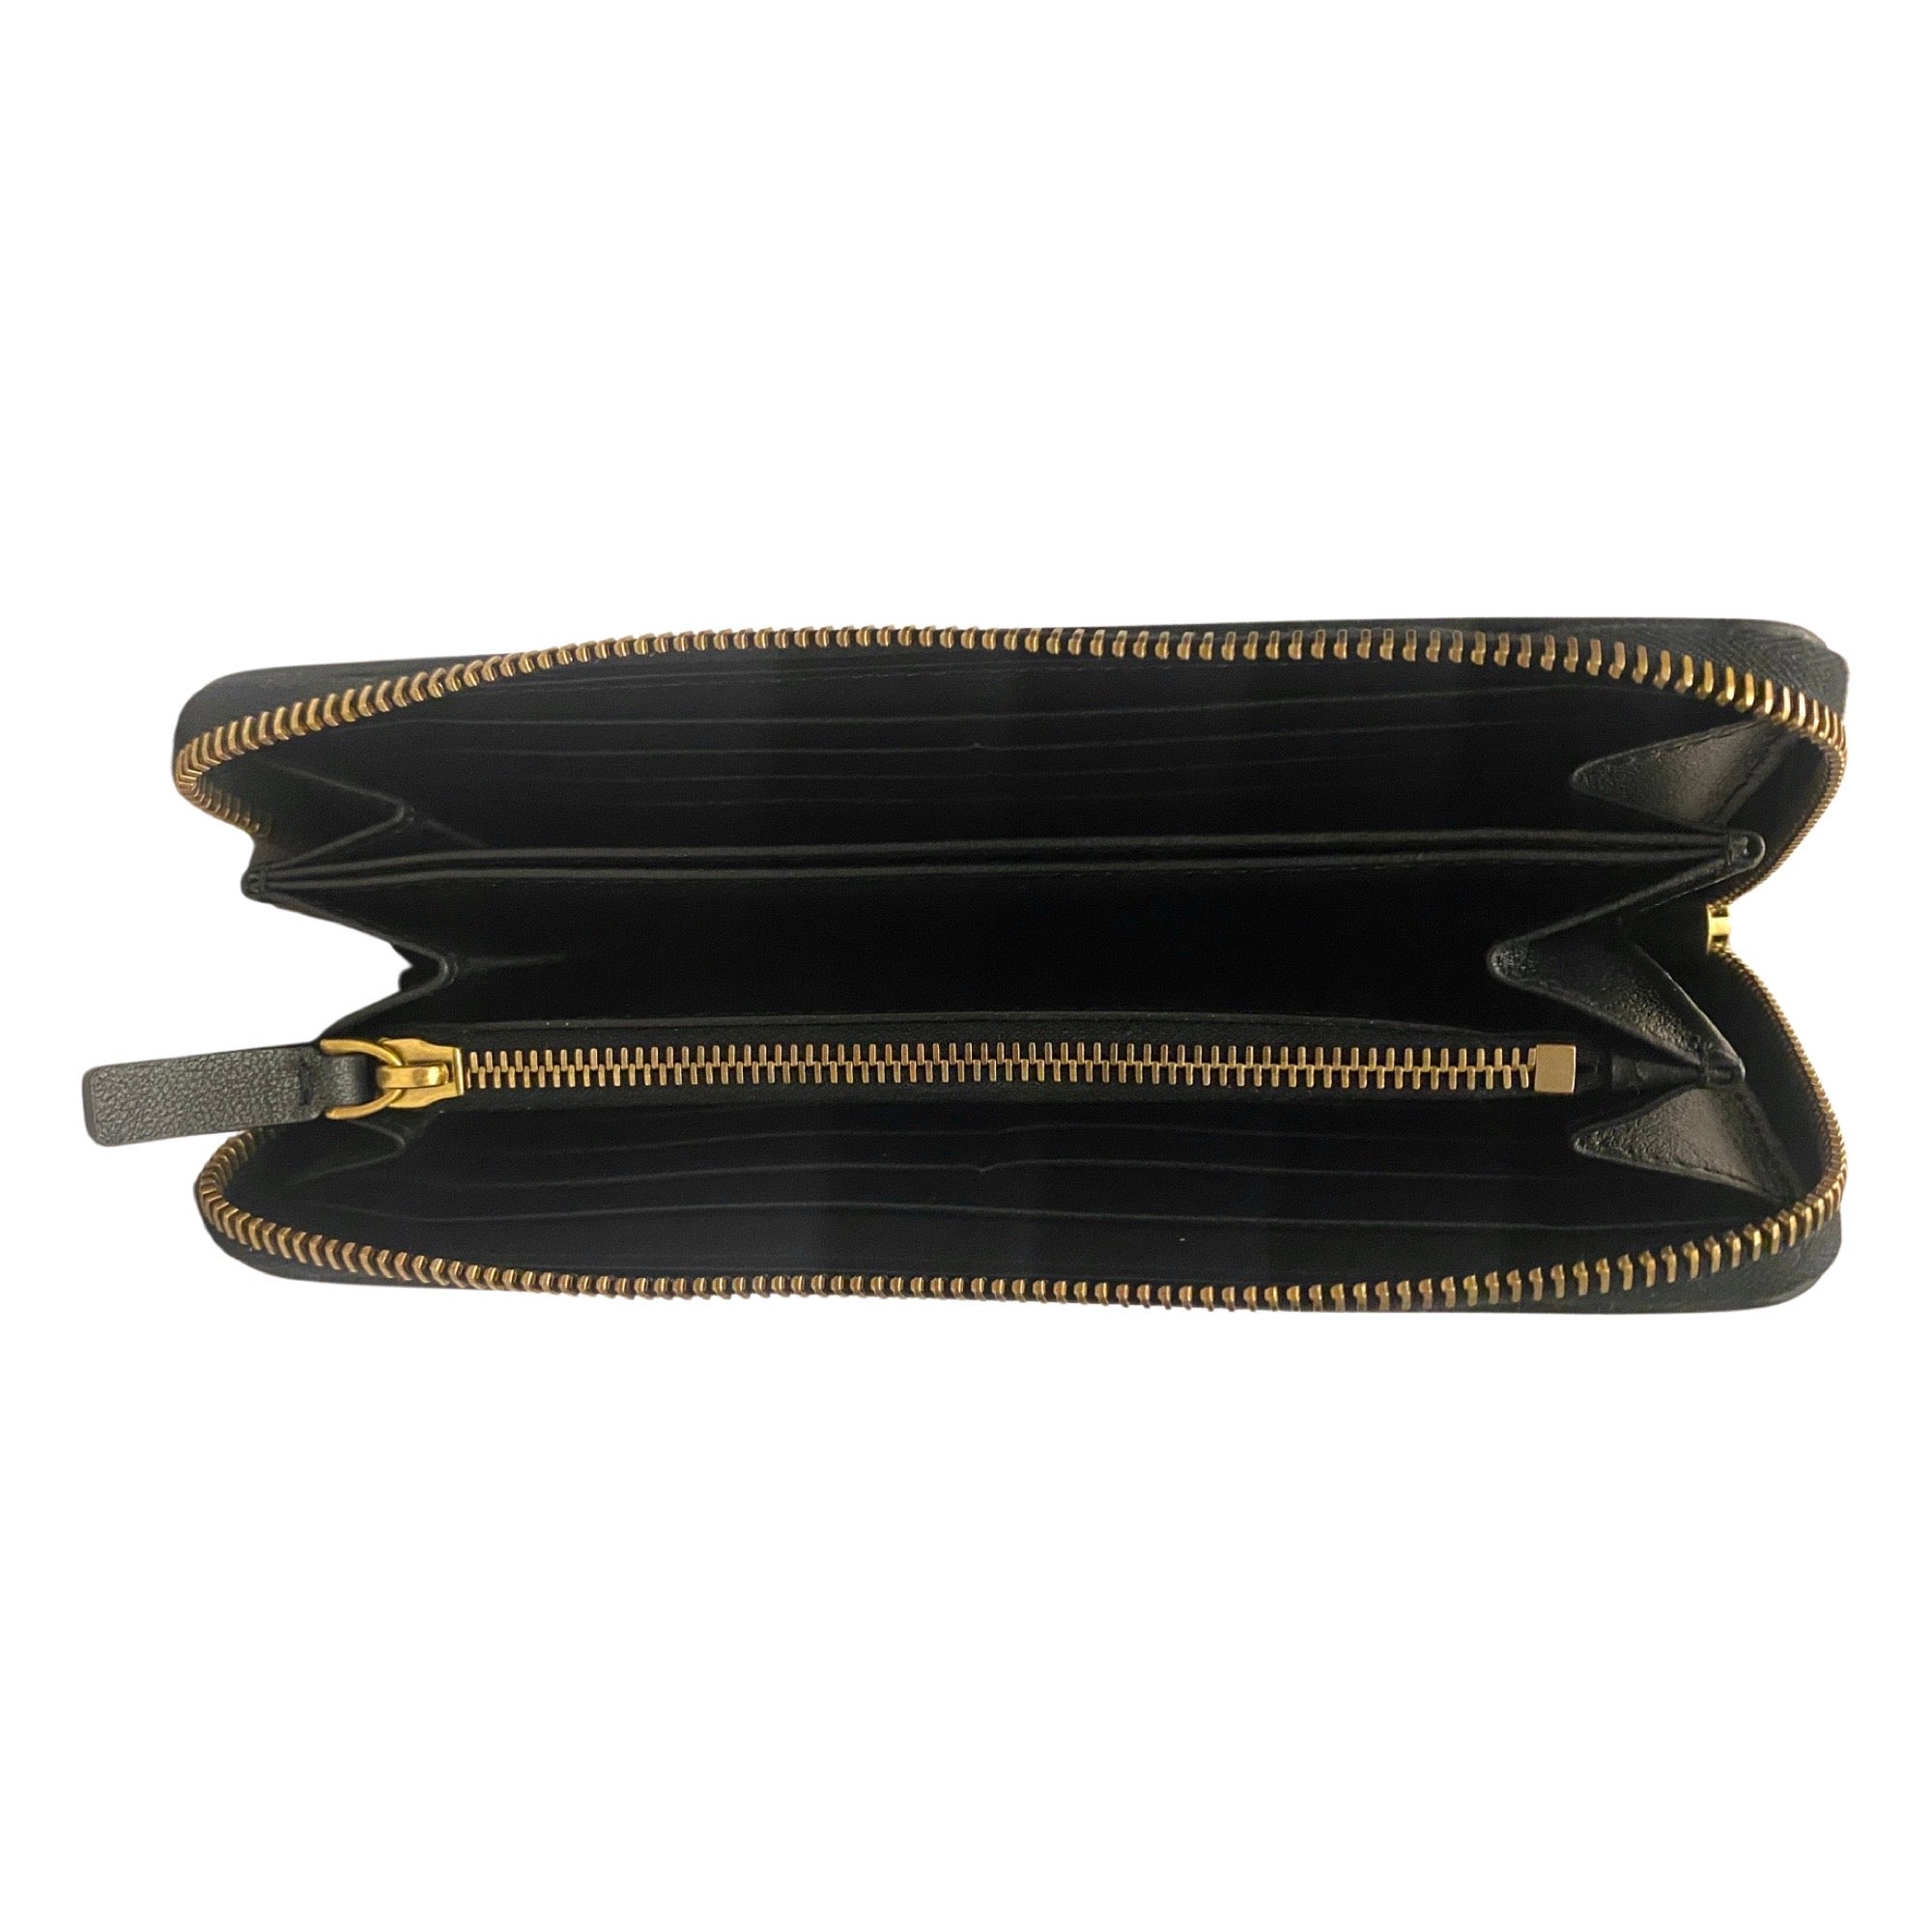 Valentino Garavani Diary Lines Black Grain Leather Zip-Around Long Wallet